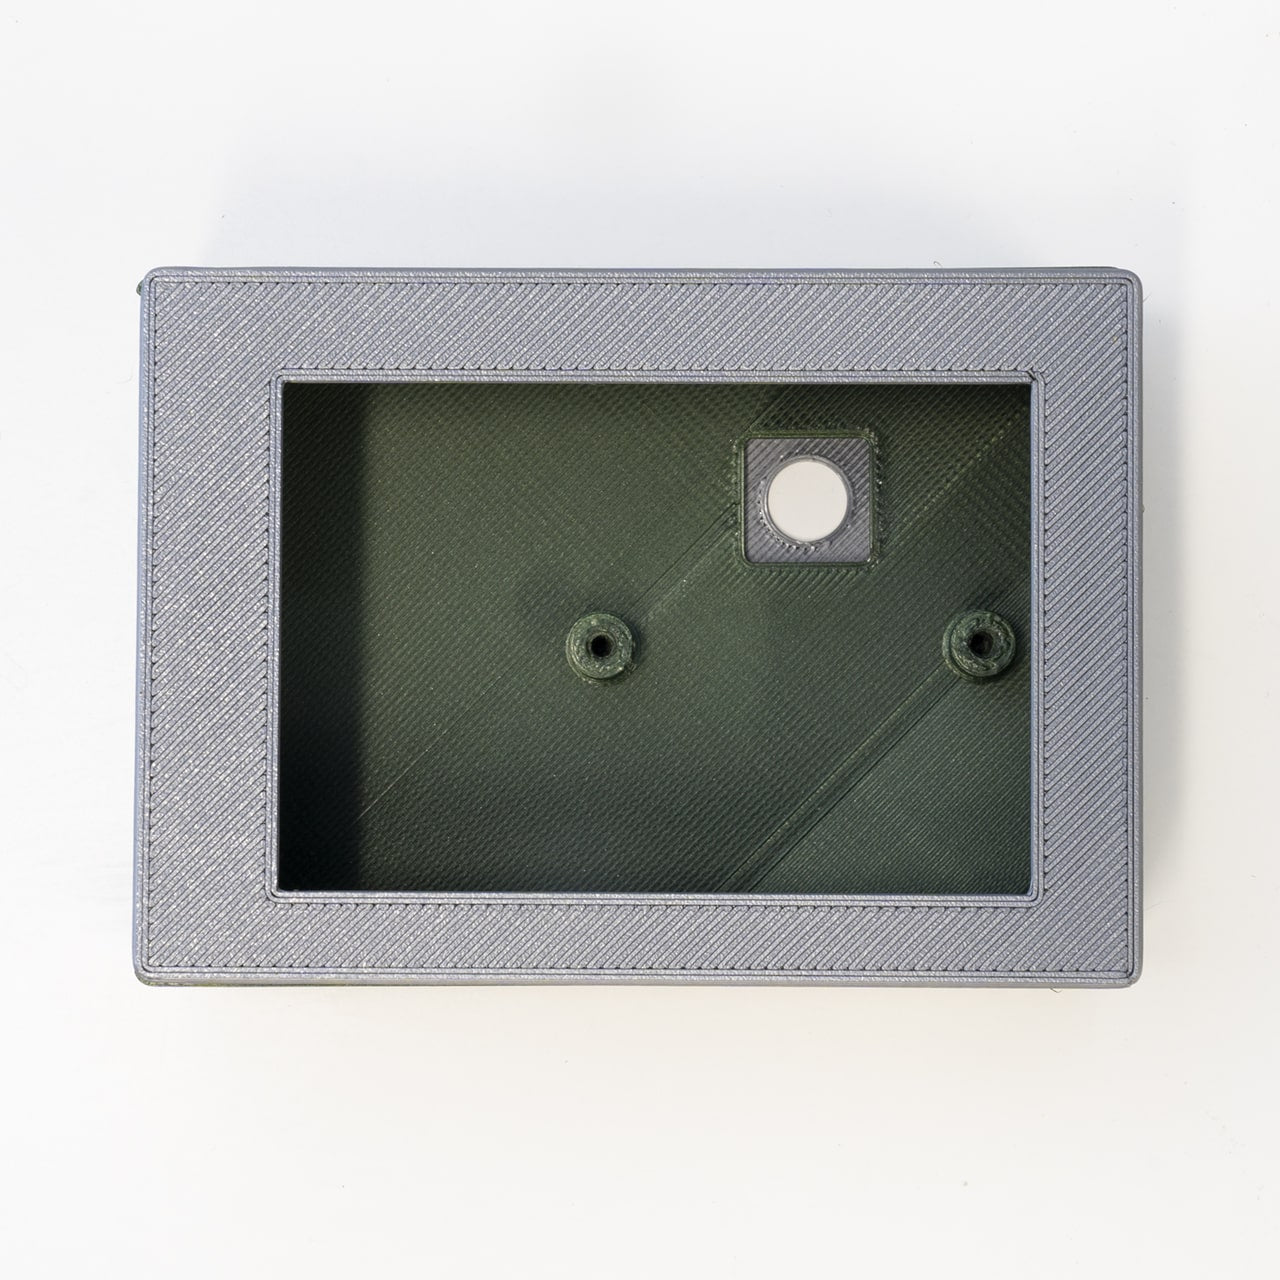 tCam gCore Portable Thermal Imaging Kit